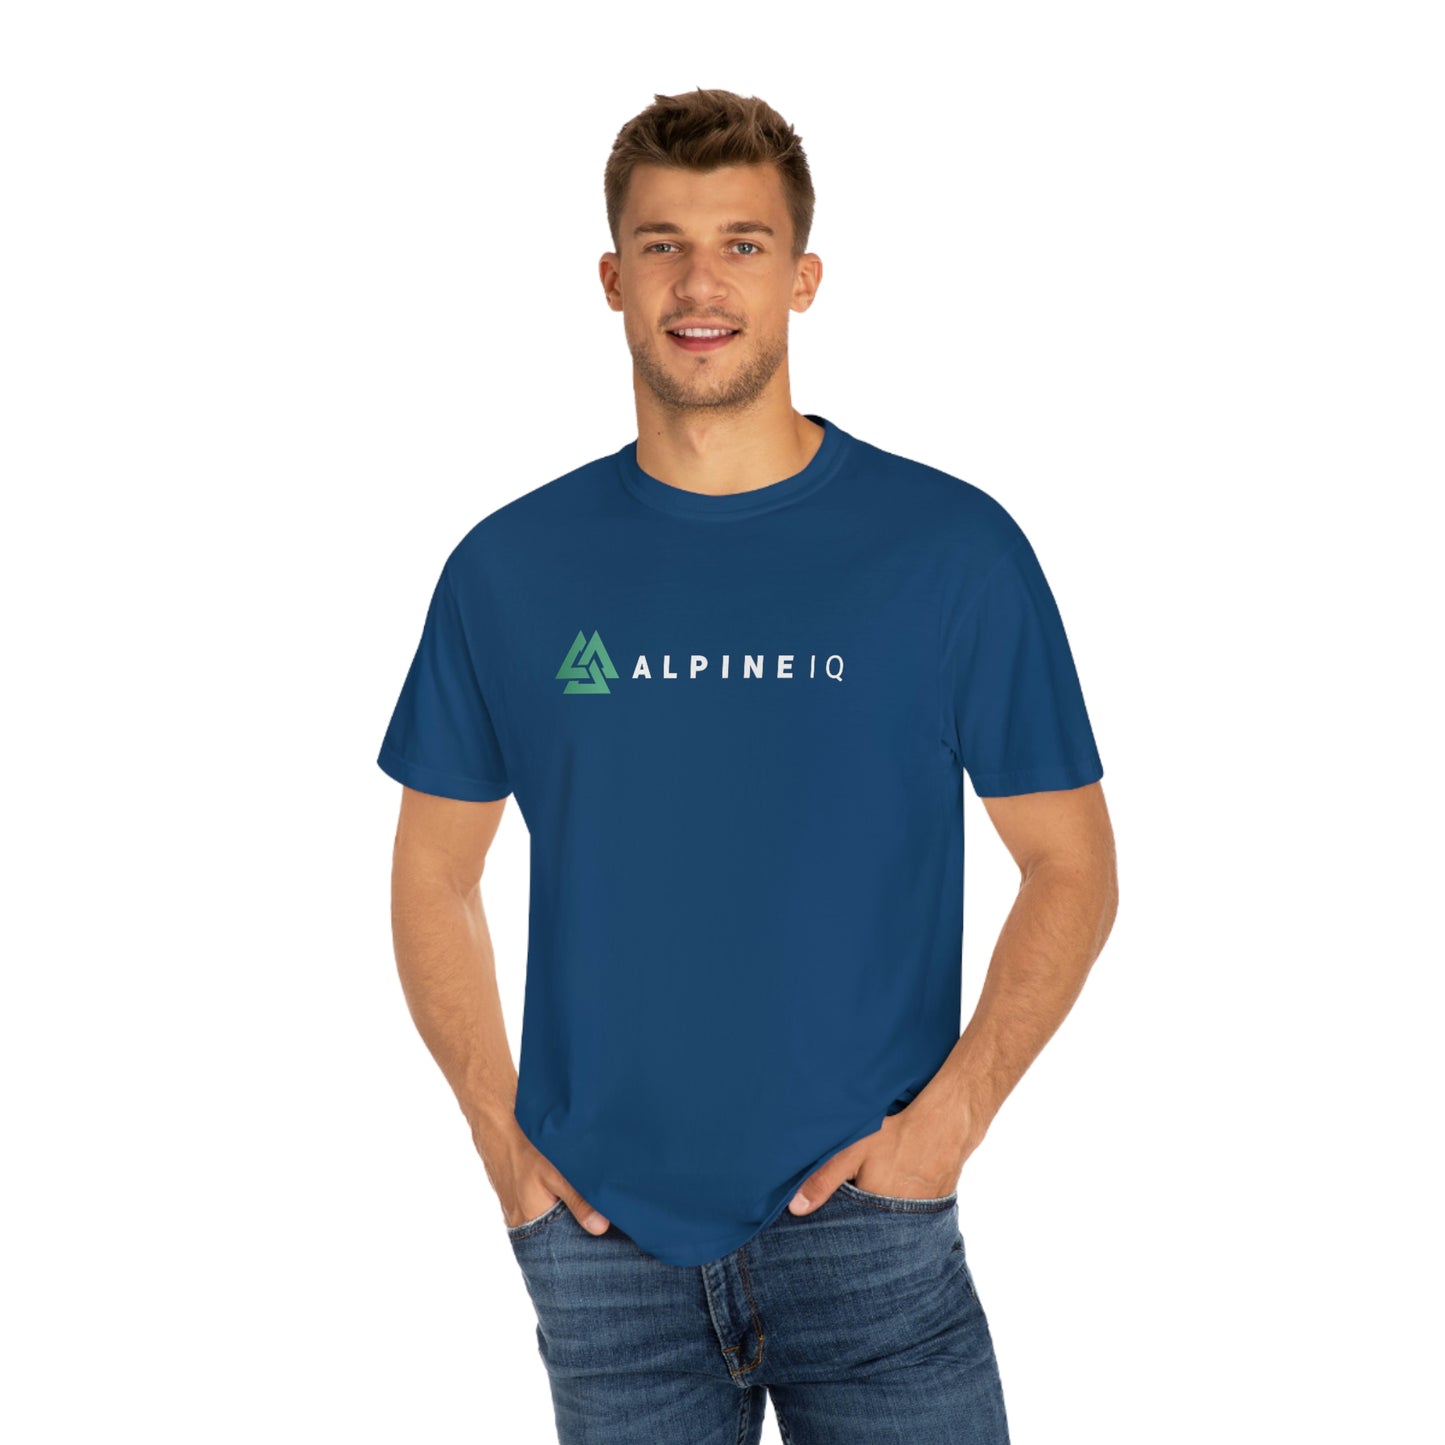 Classic Alpine IQ Short Sleeve T-Shirt - Heavy weight shirt